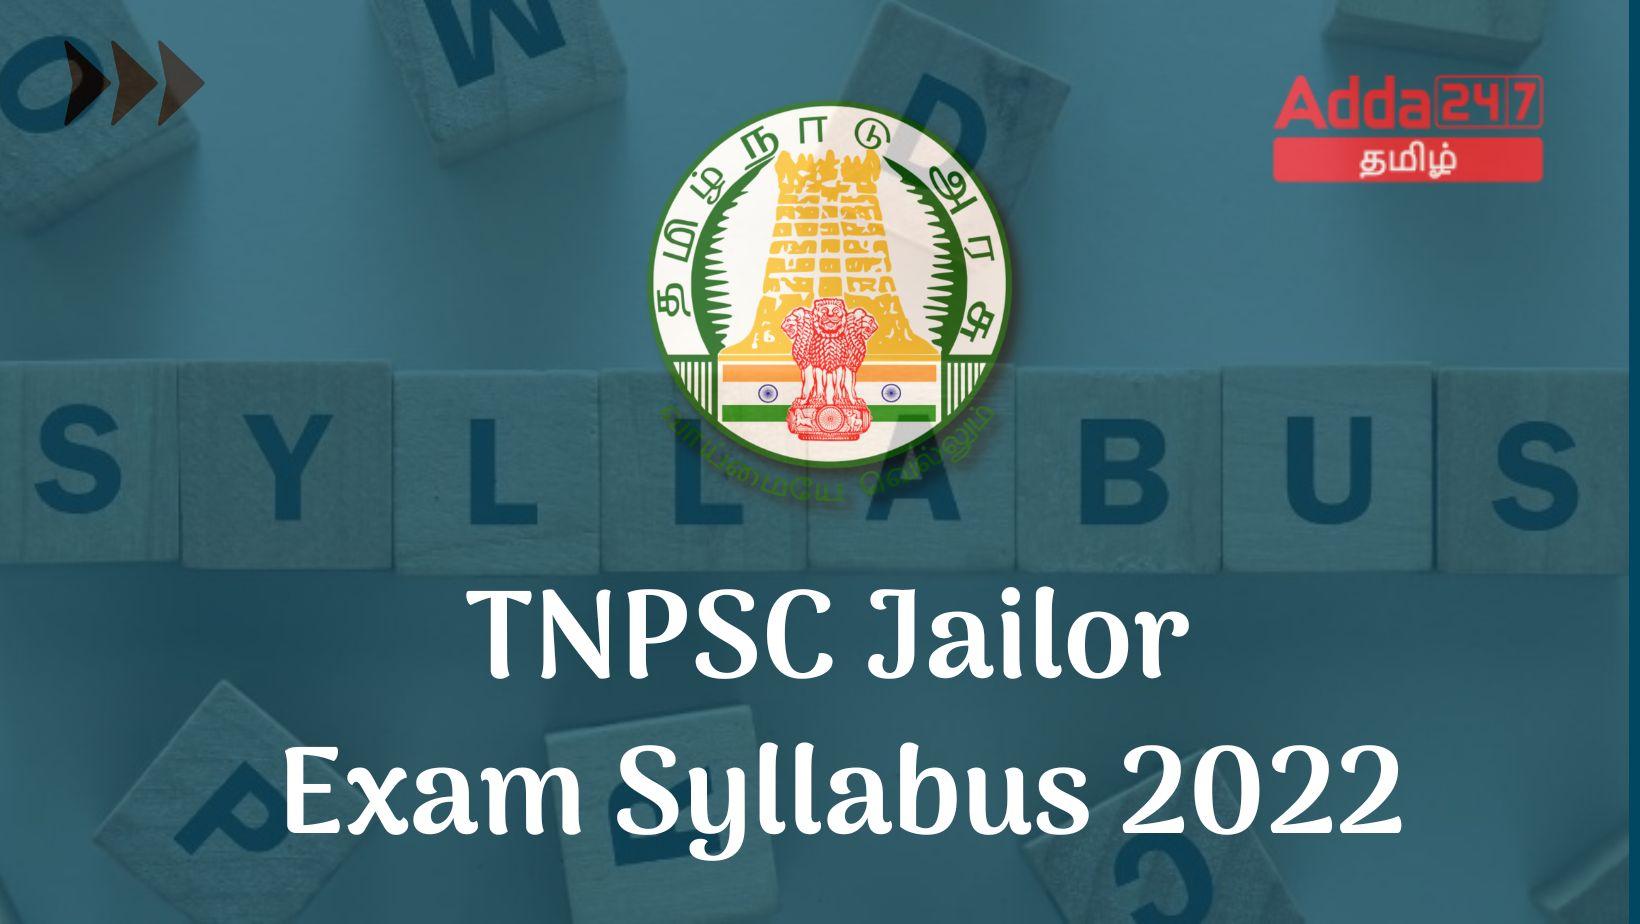 TNPSC Jailor Exam Syllabus 2022